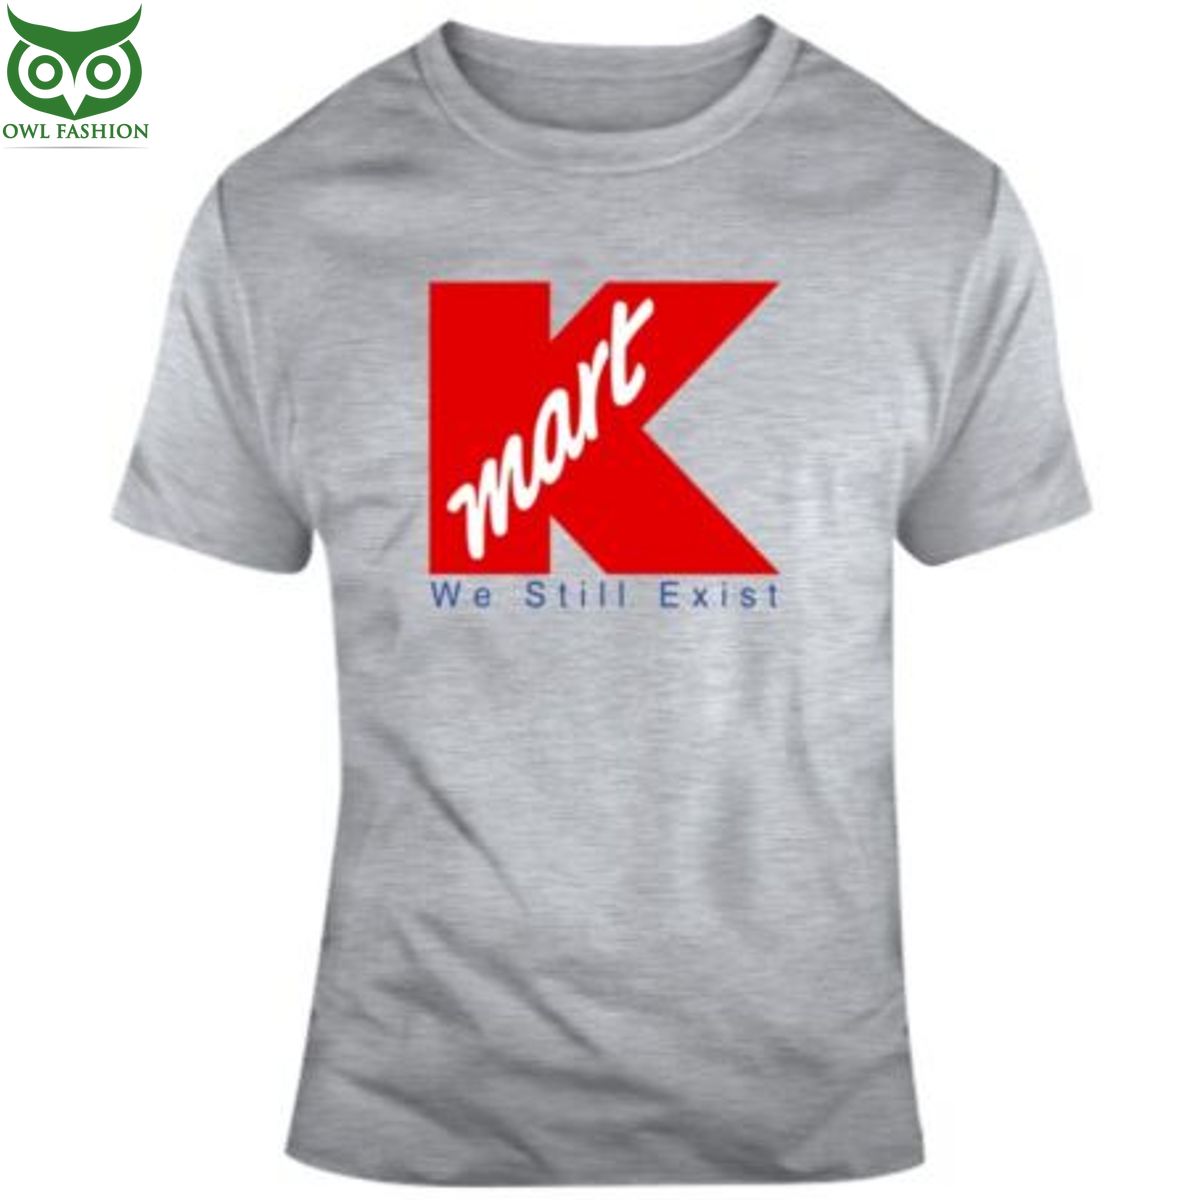 Kmart t shirt Funny We Still Exist shop owl fashion